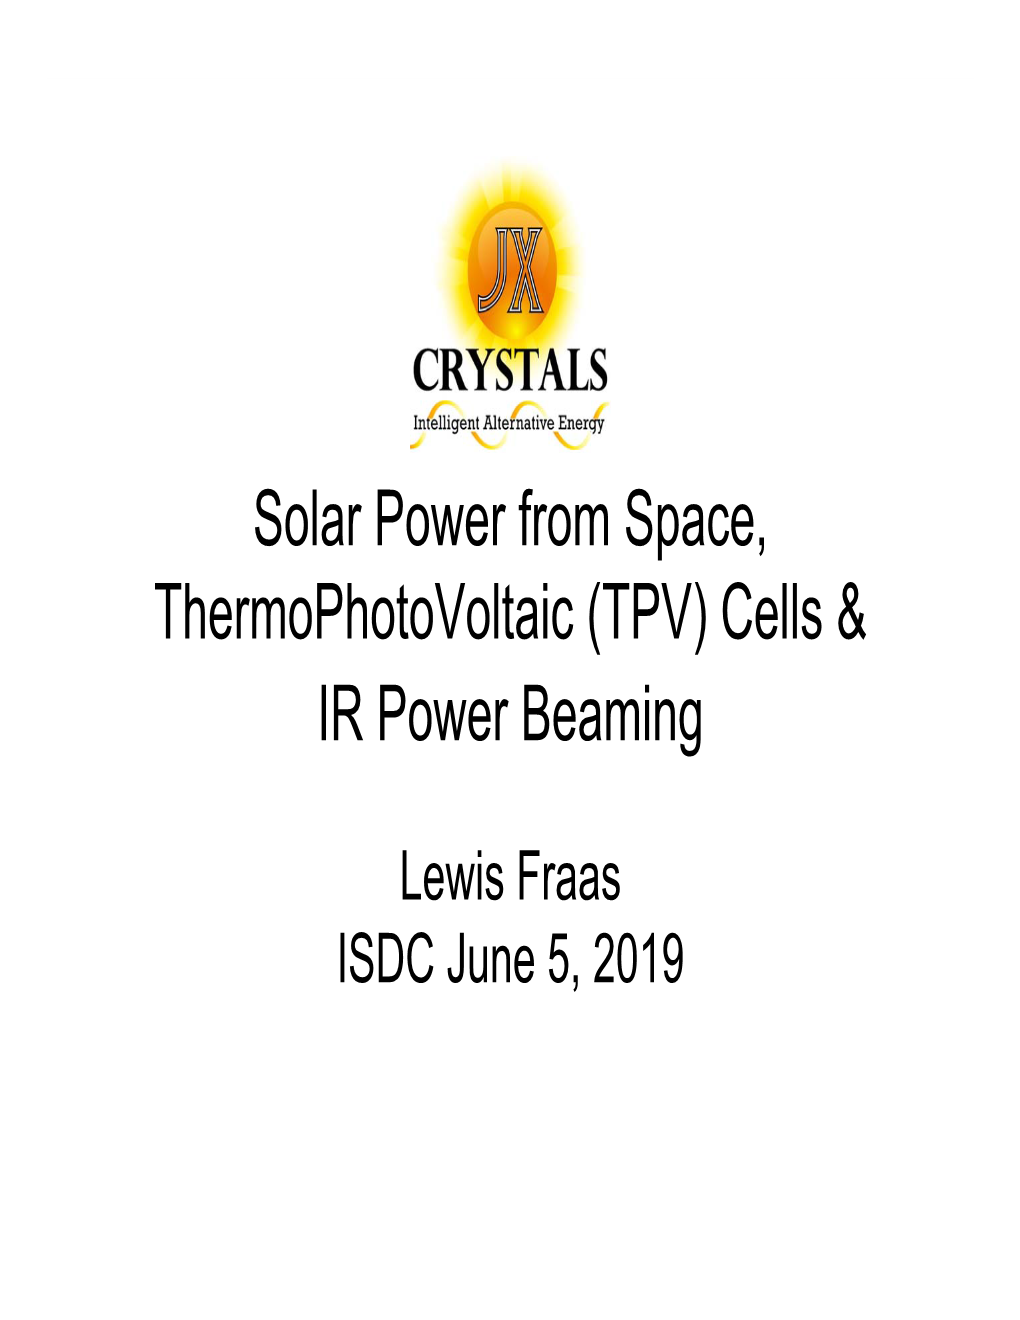 (TPV) Cells & IR Power Beaming